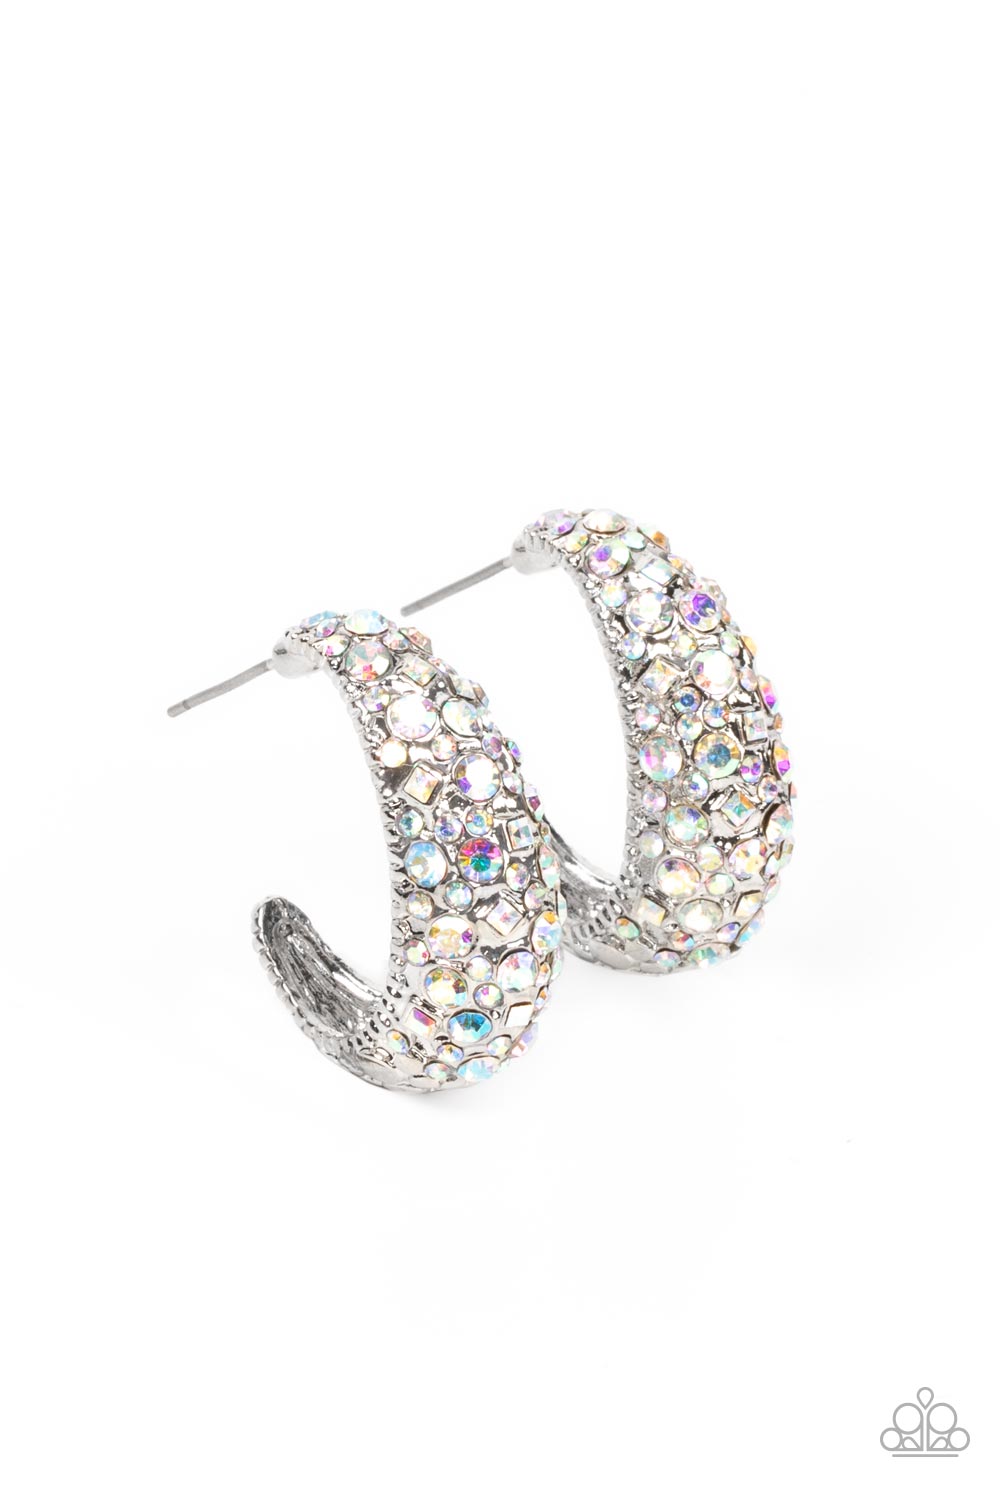 Paparazzi Accessories - Glamorously Glimmering #E240 Peg - Multi Earrings